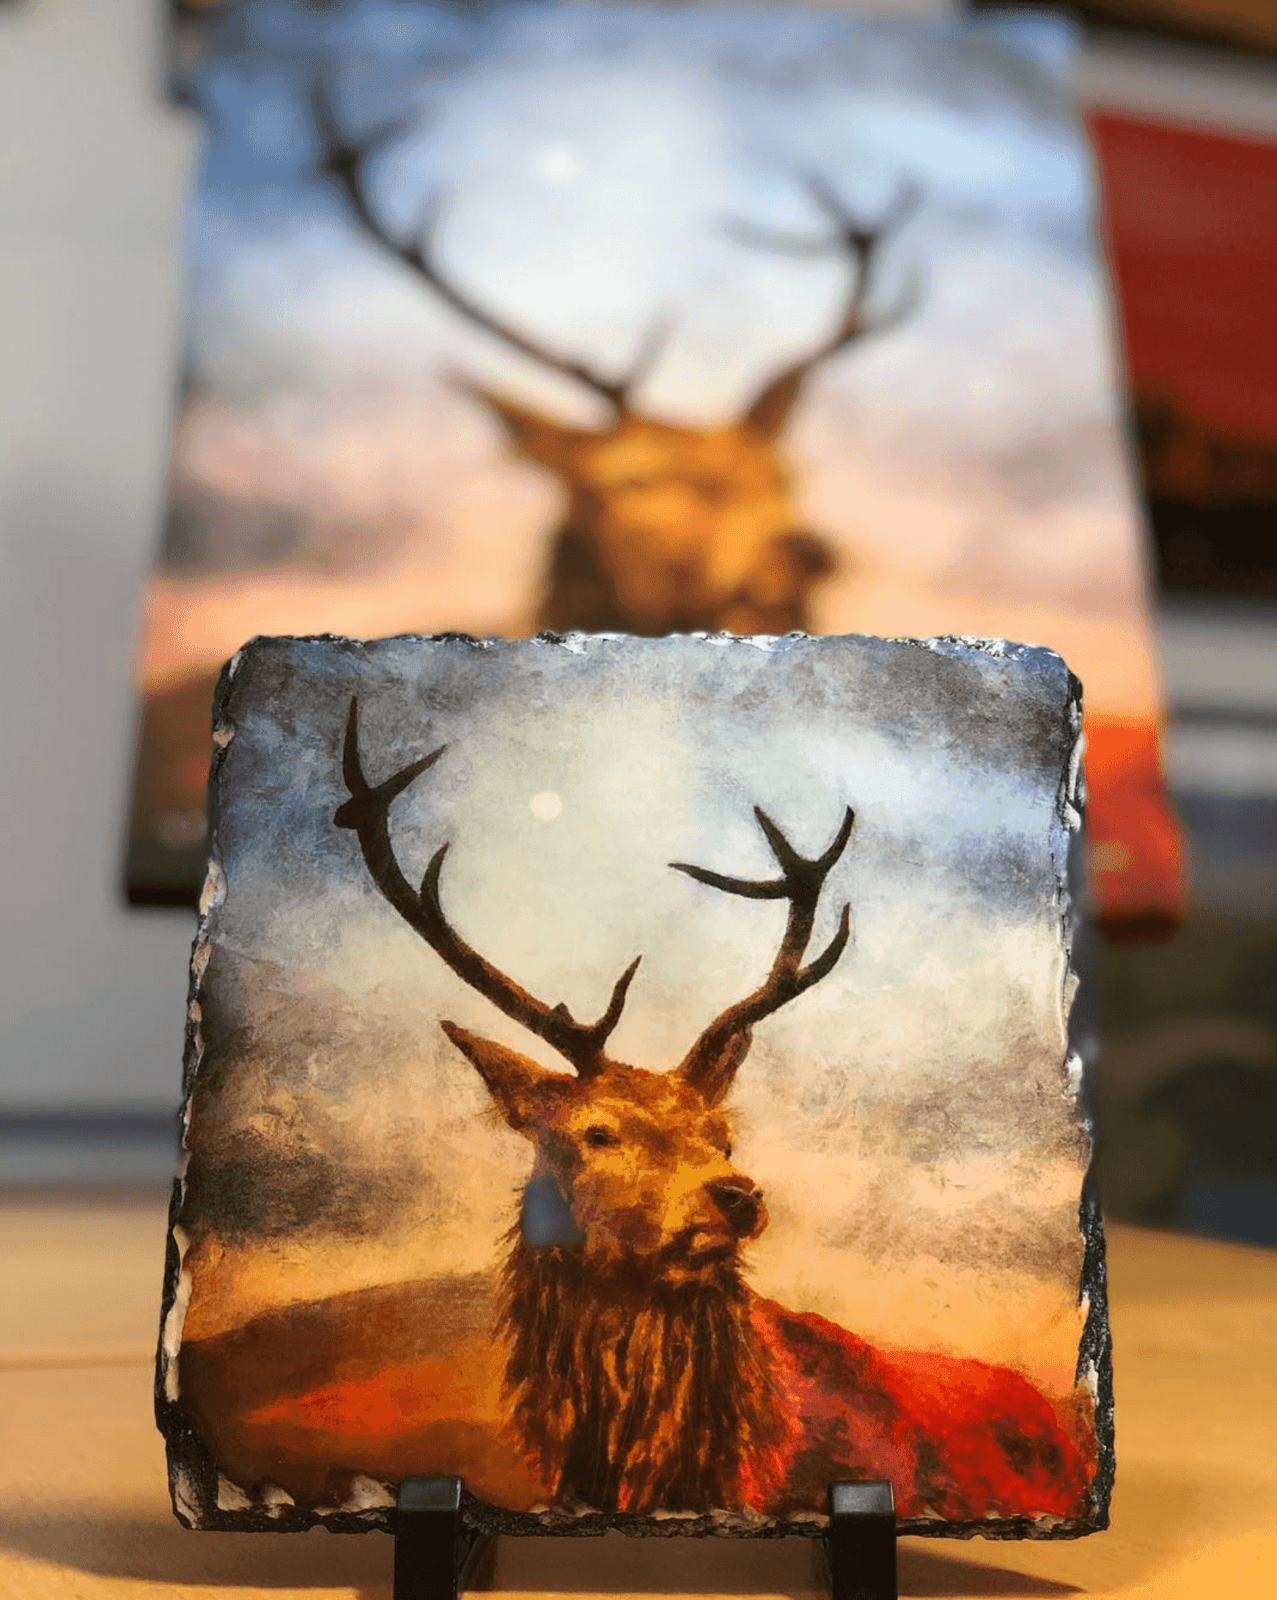 Glen Nevis Moonlight Slate Art-Slate Art-Scottish Mountains & Munros Art Gallery-Paintings, Prints, Homeware, Art Gifts From Scotland By Scottish Artist Kevin Hunter